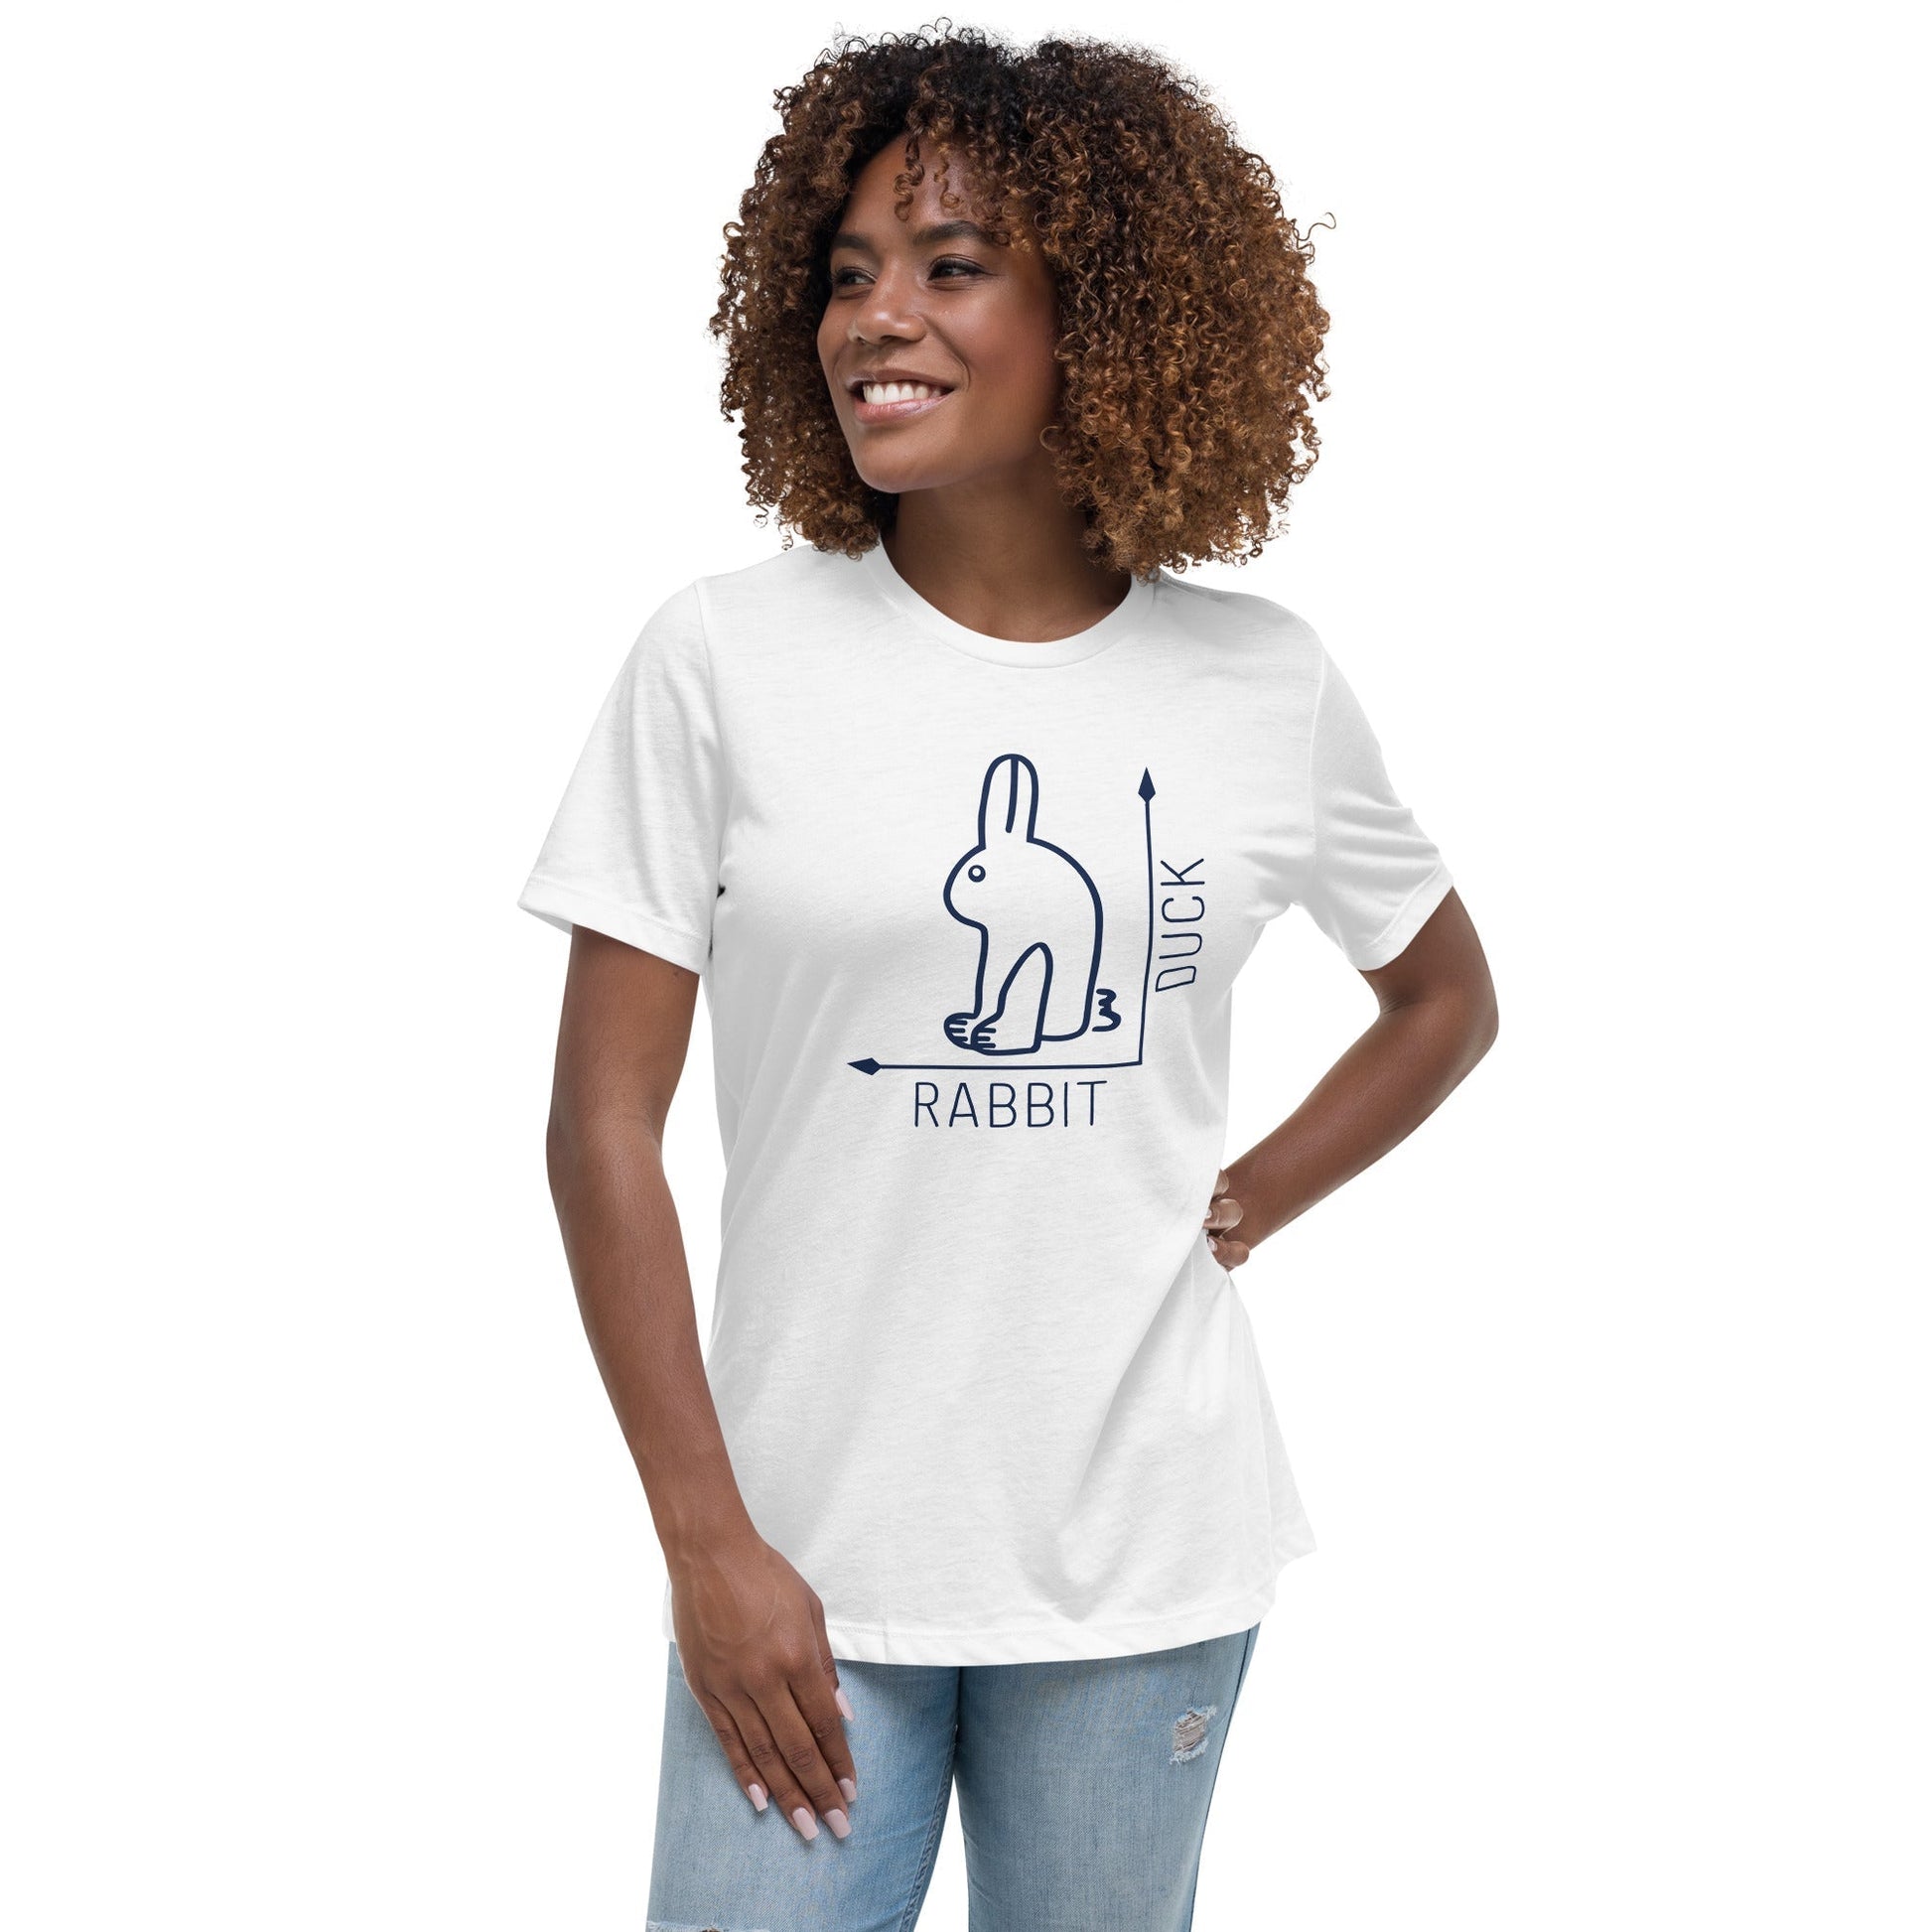 Rabbit-Duck Illusion - Rabbit Edition - Women's T-Shirt